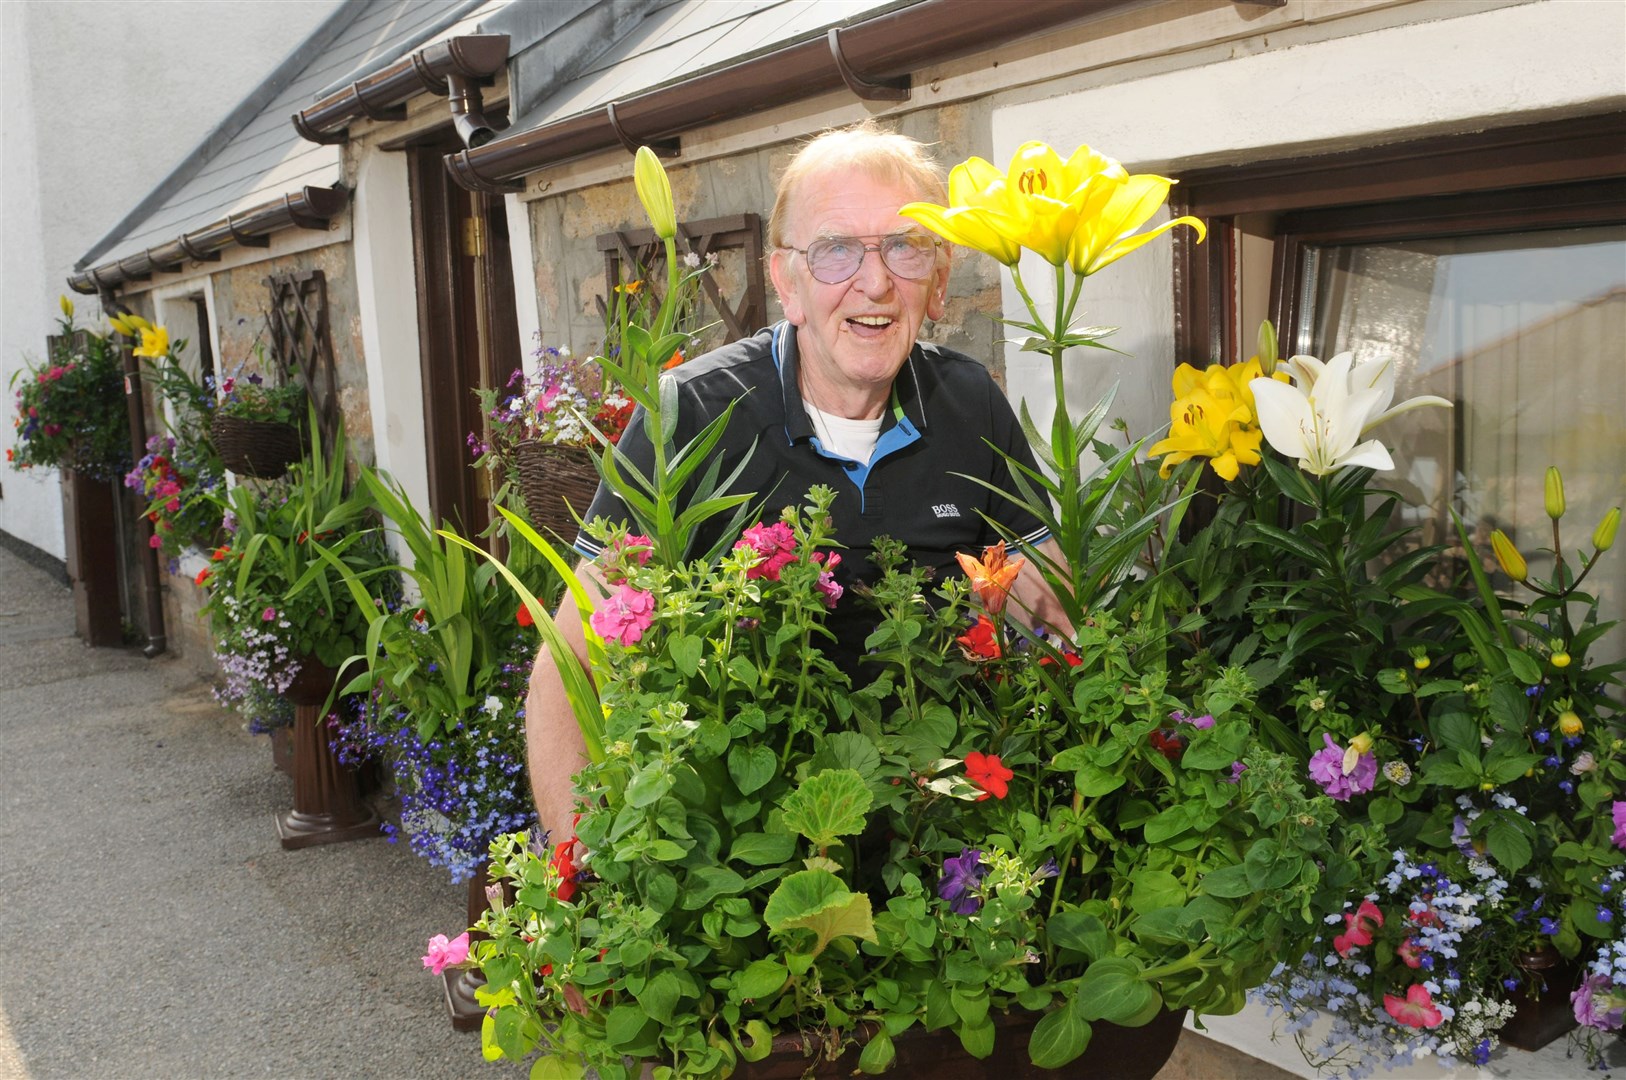 Allan Cameron receives a lot of praise for his garden. Picture: James Mackenzie